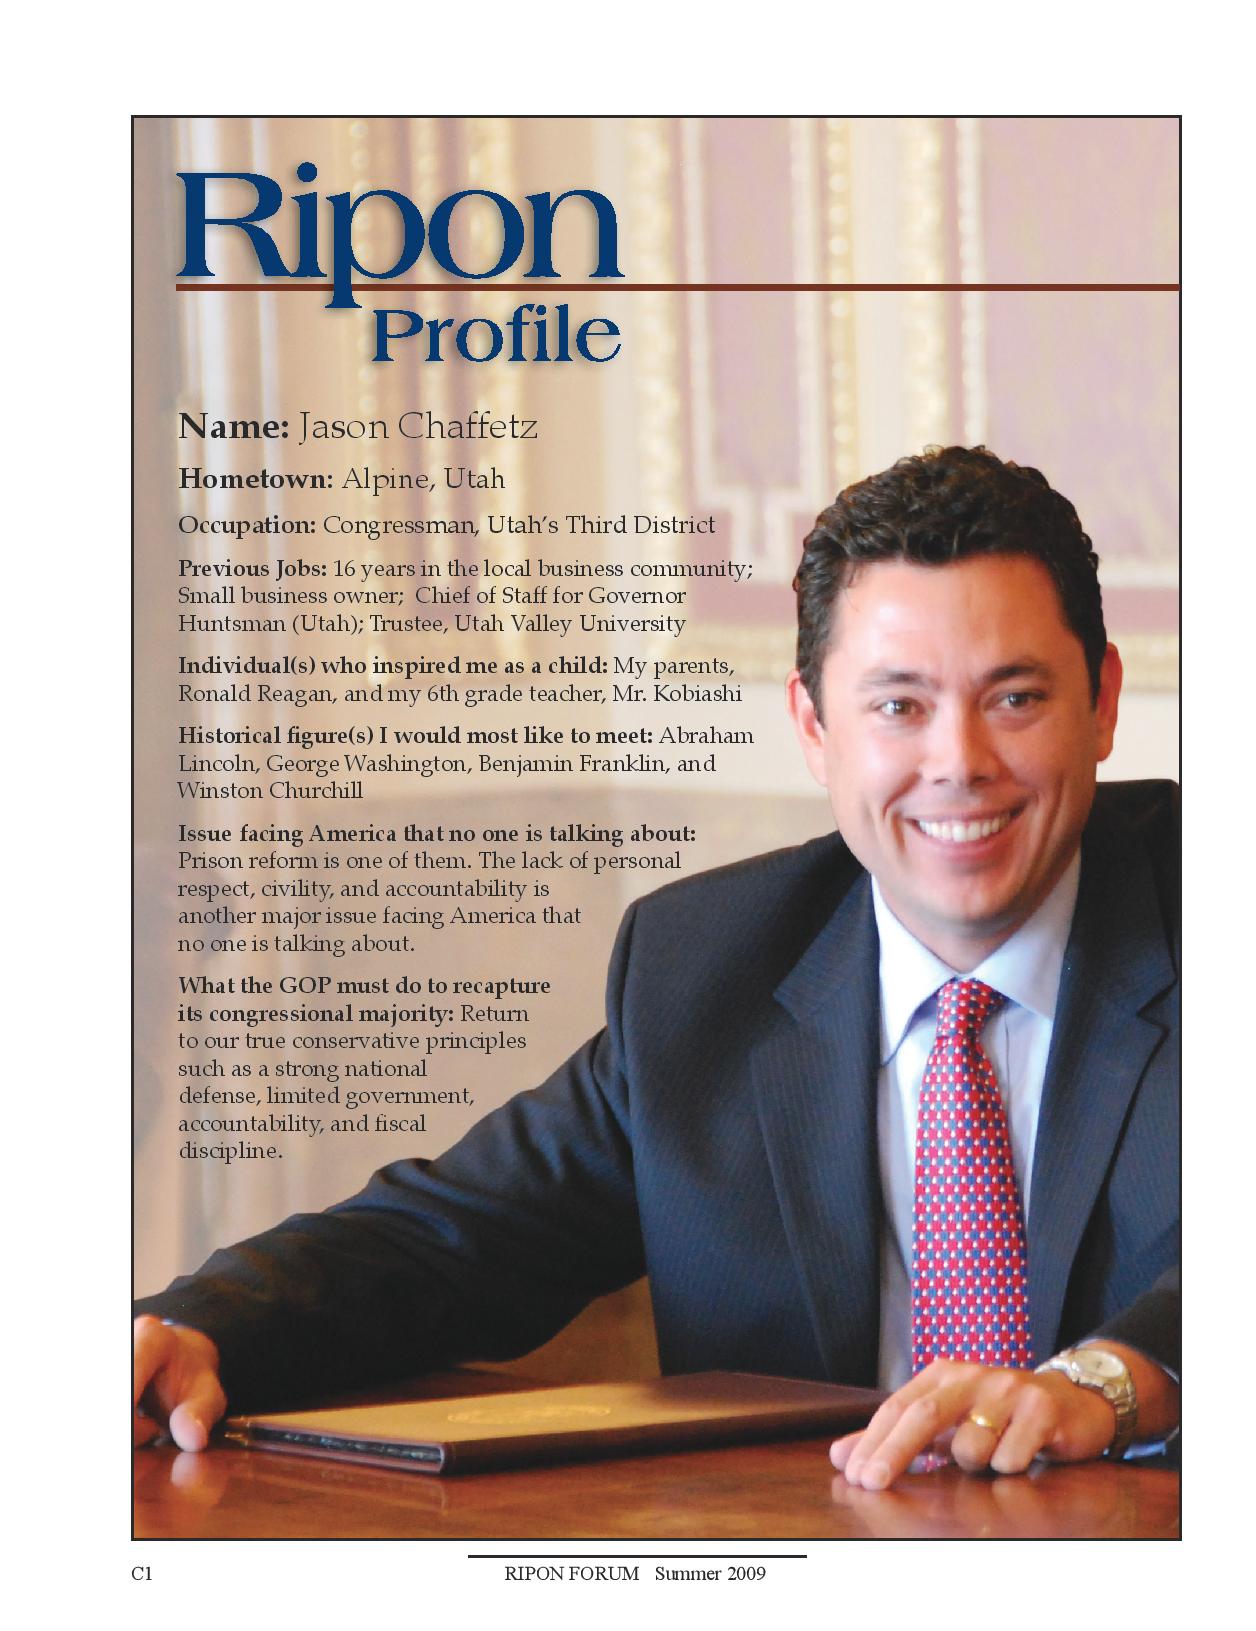 The Ripon Profile of Jason Chaffetz